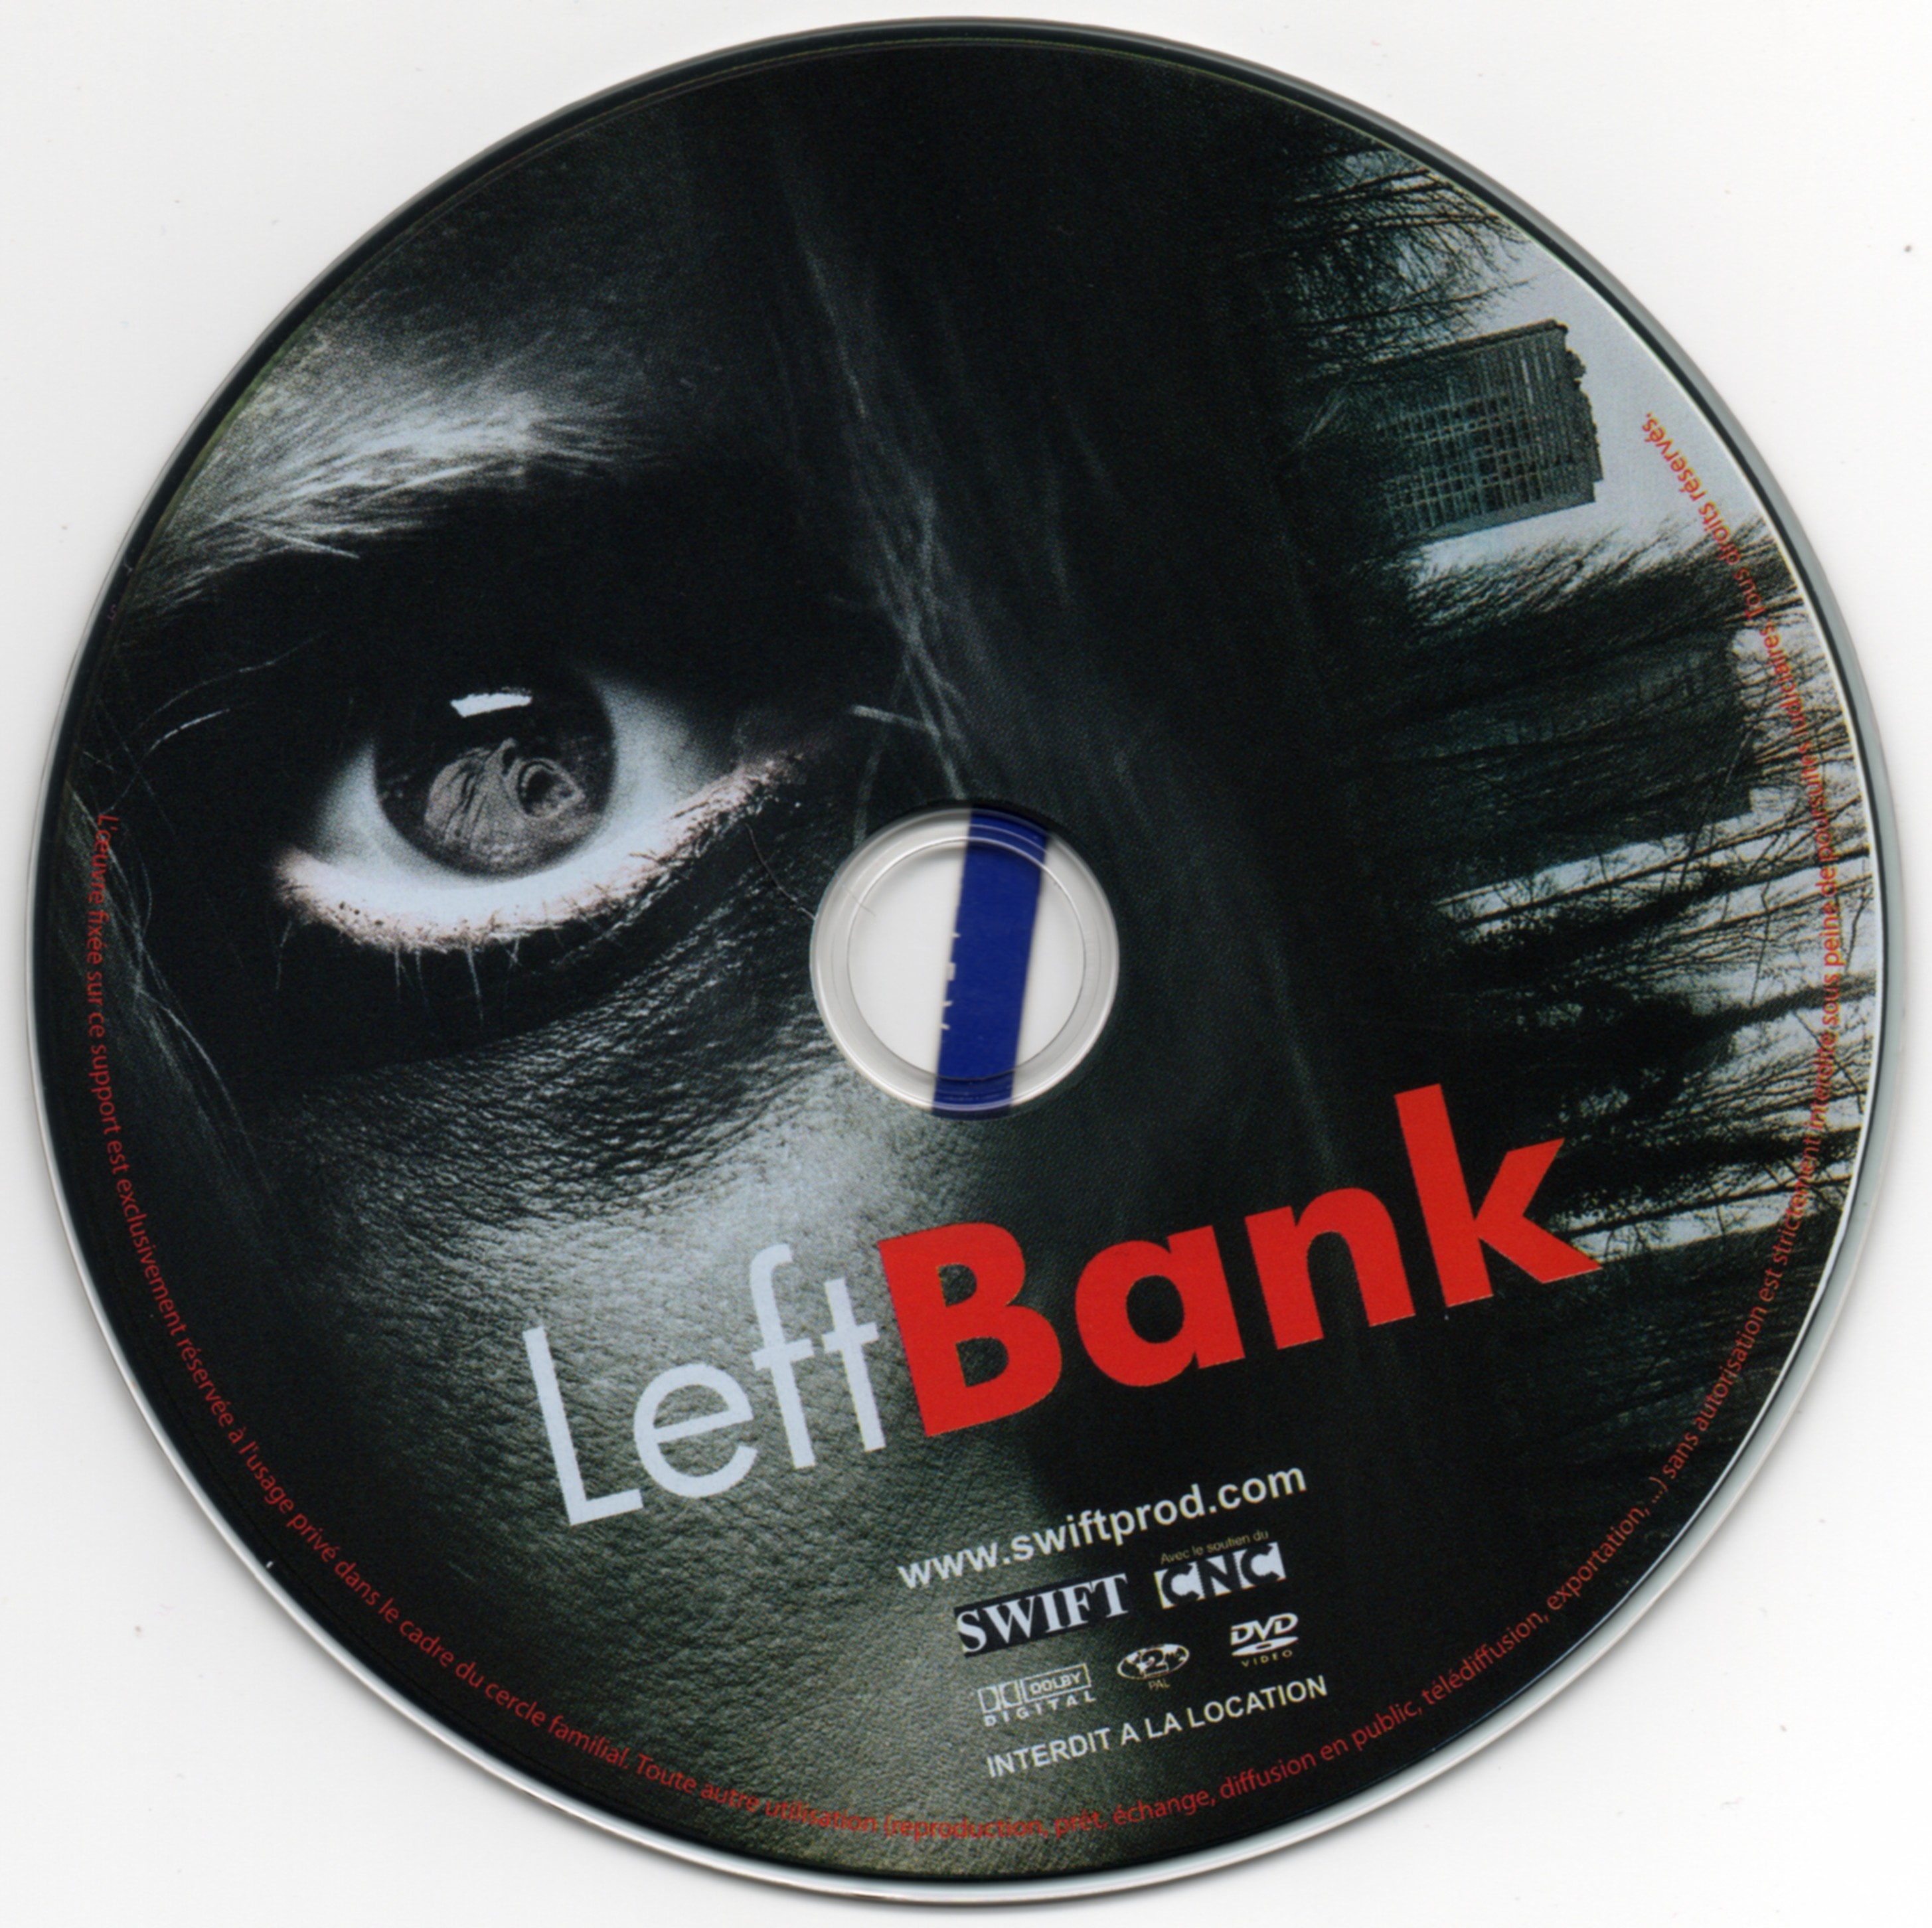 Left bank